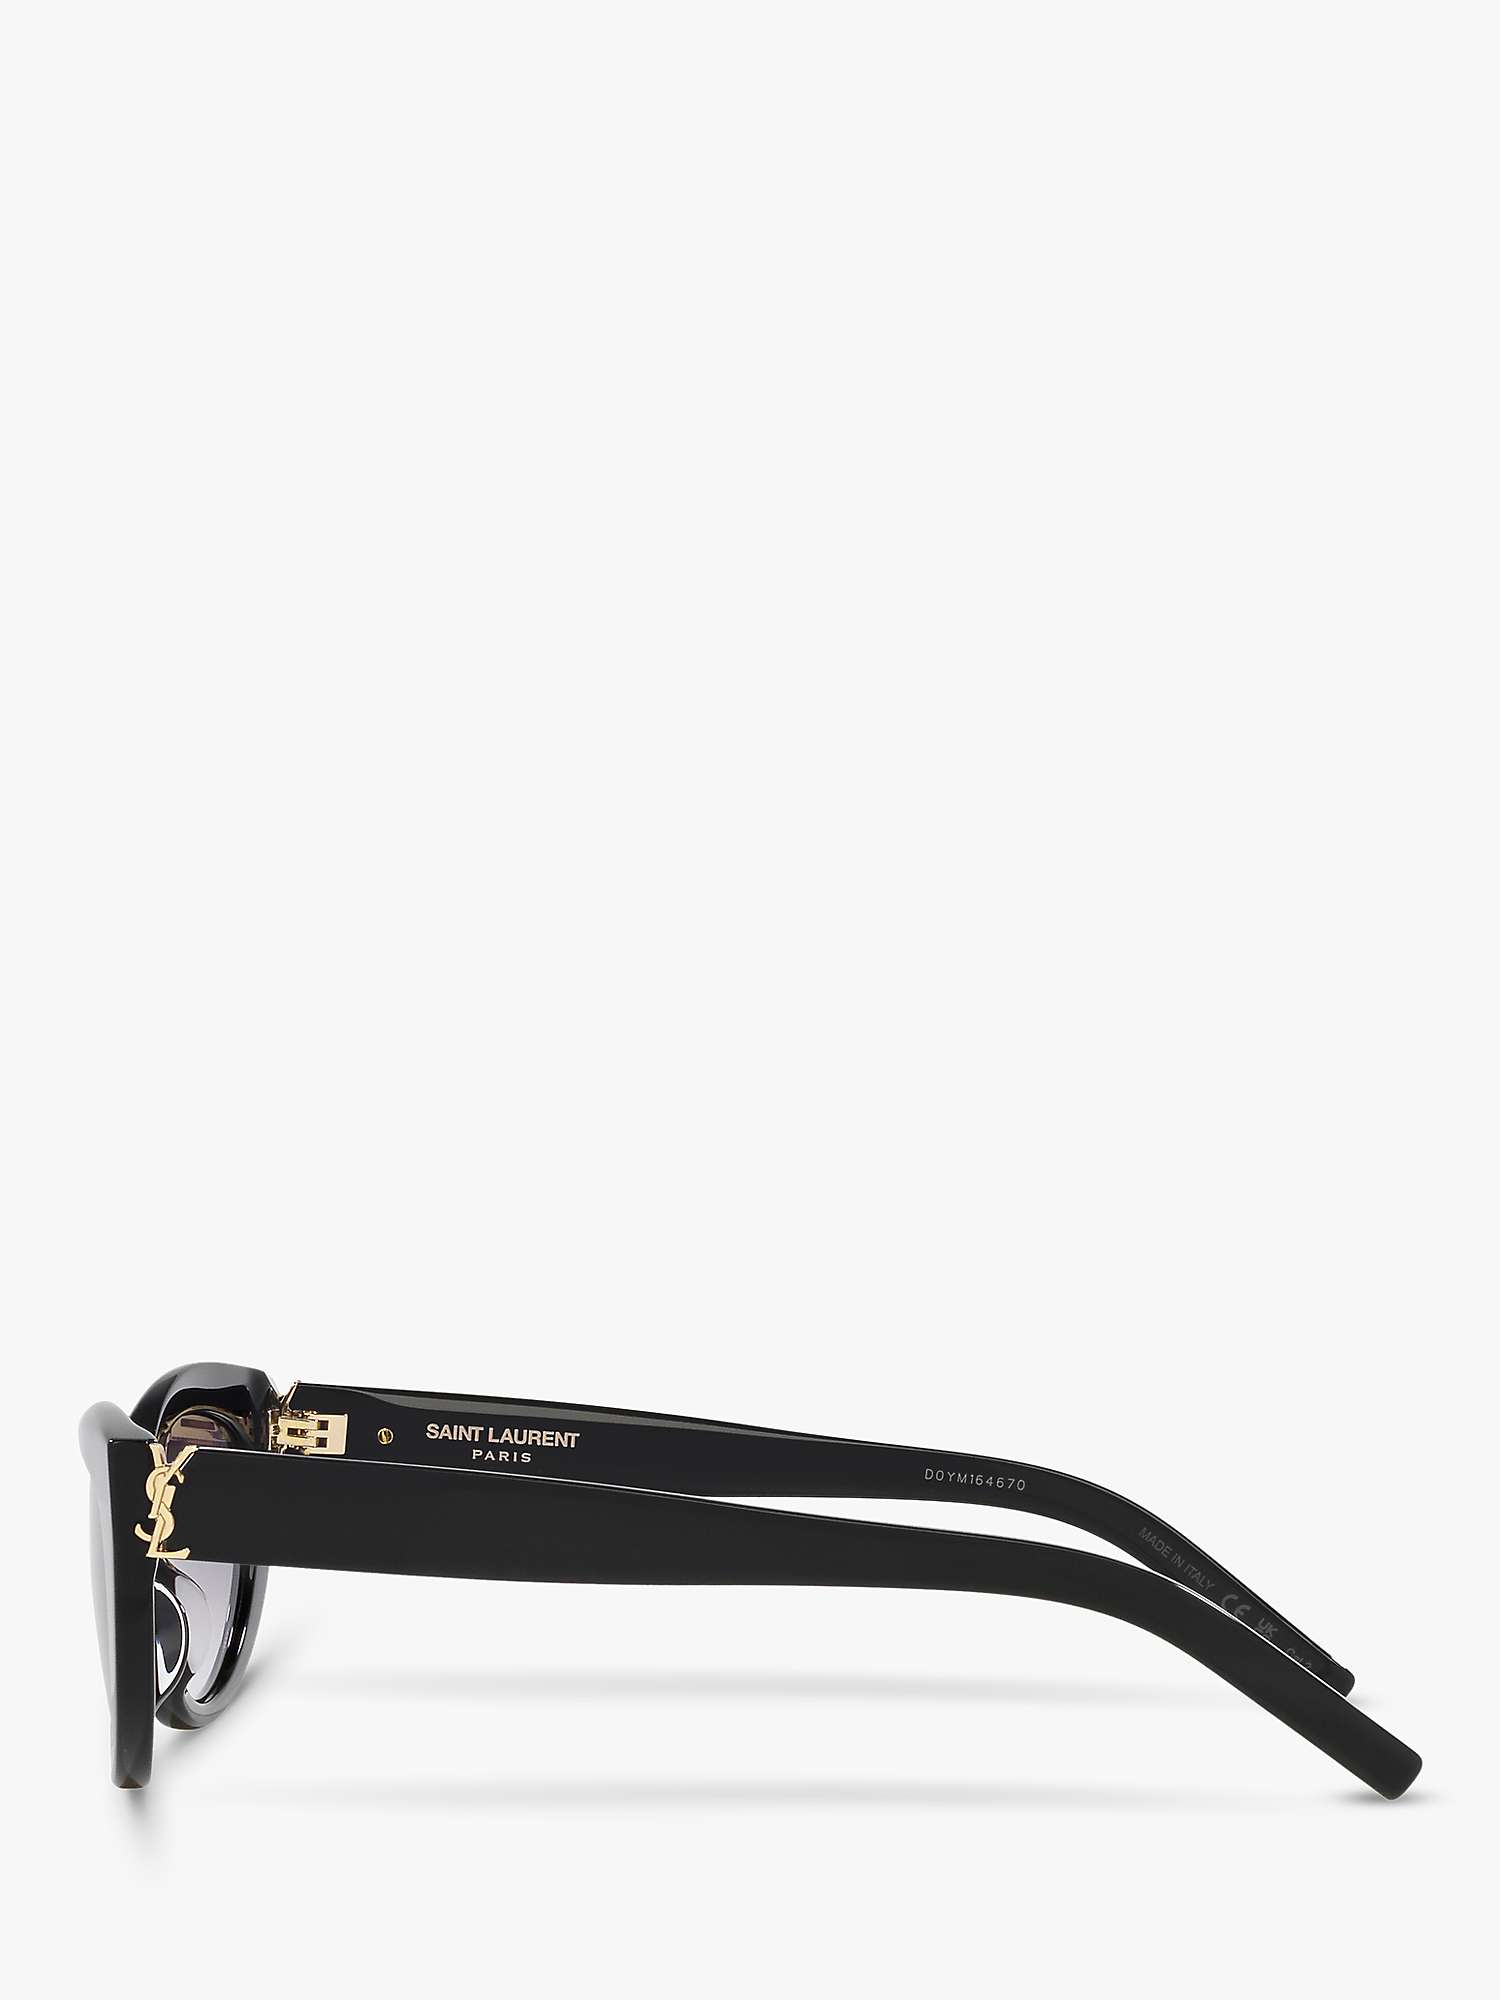 Buy Yves Saint Laurent YS000478 Women's Oval Sunglasses, Black/Grey Online at johnlewis.com